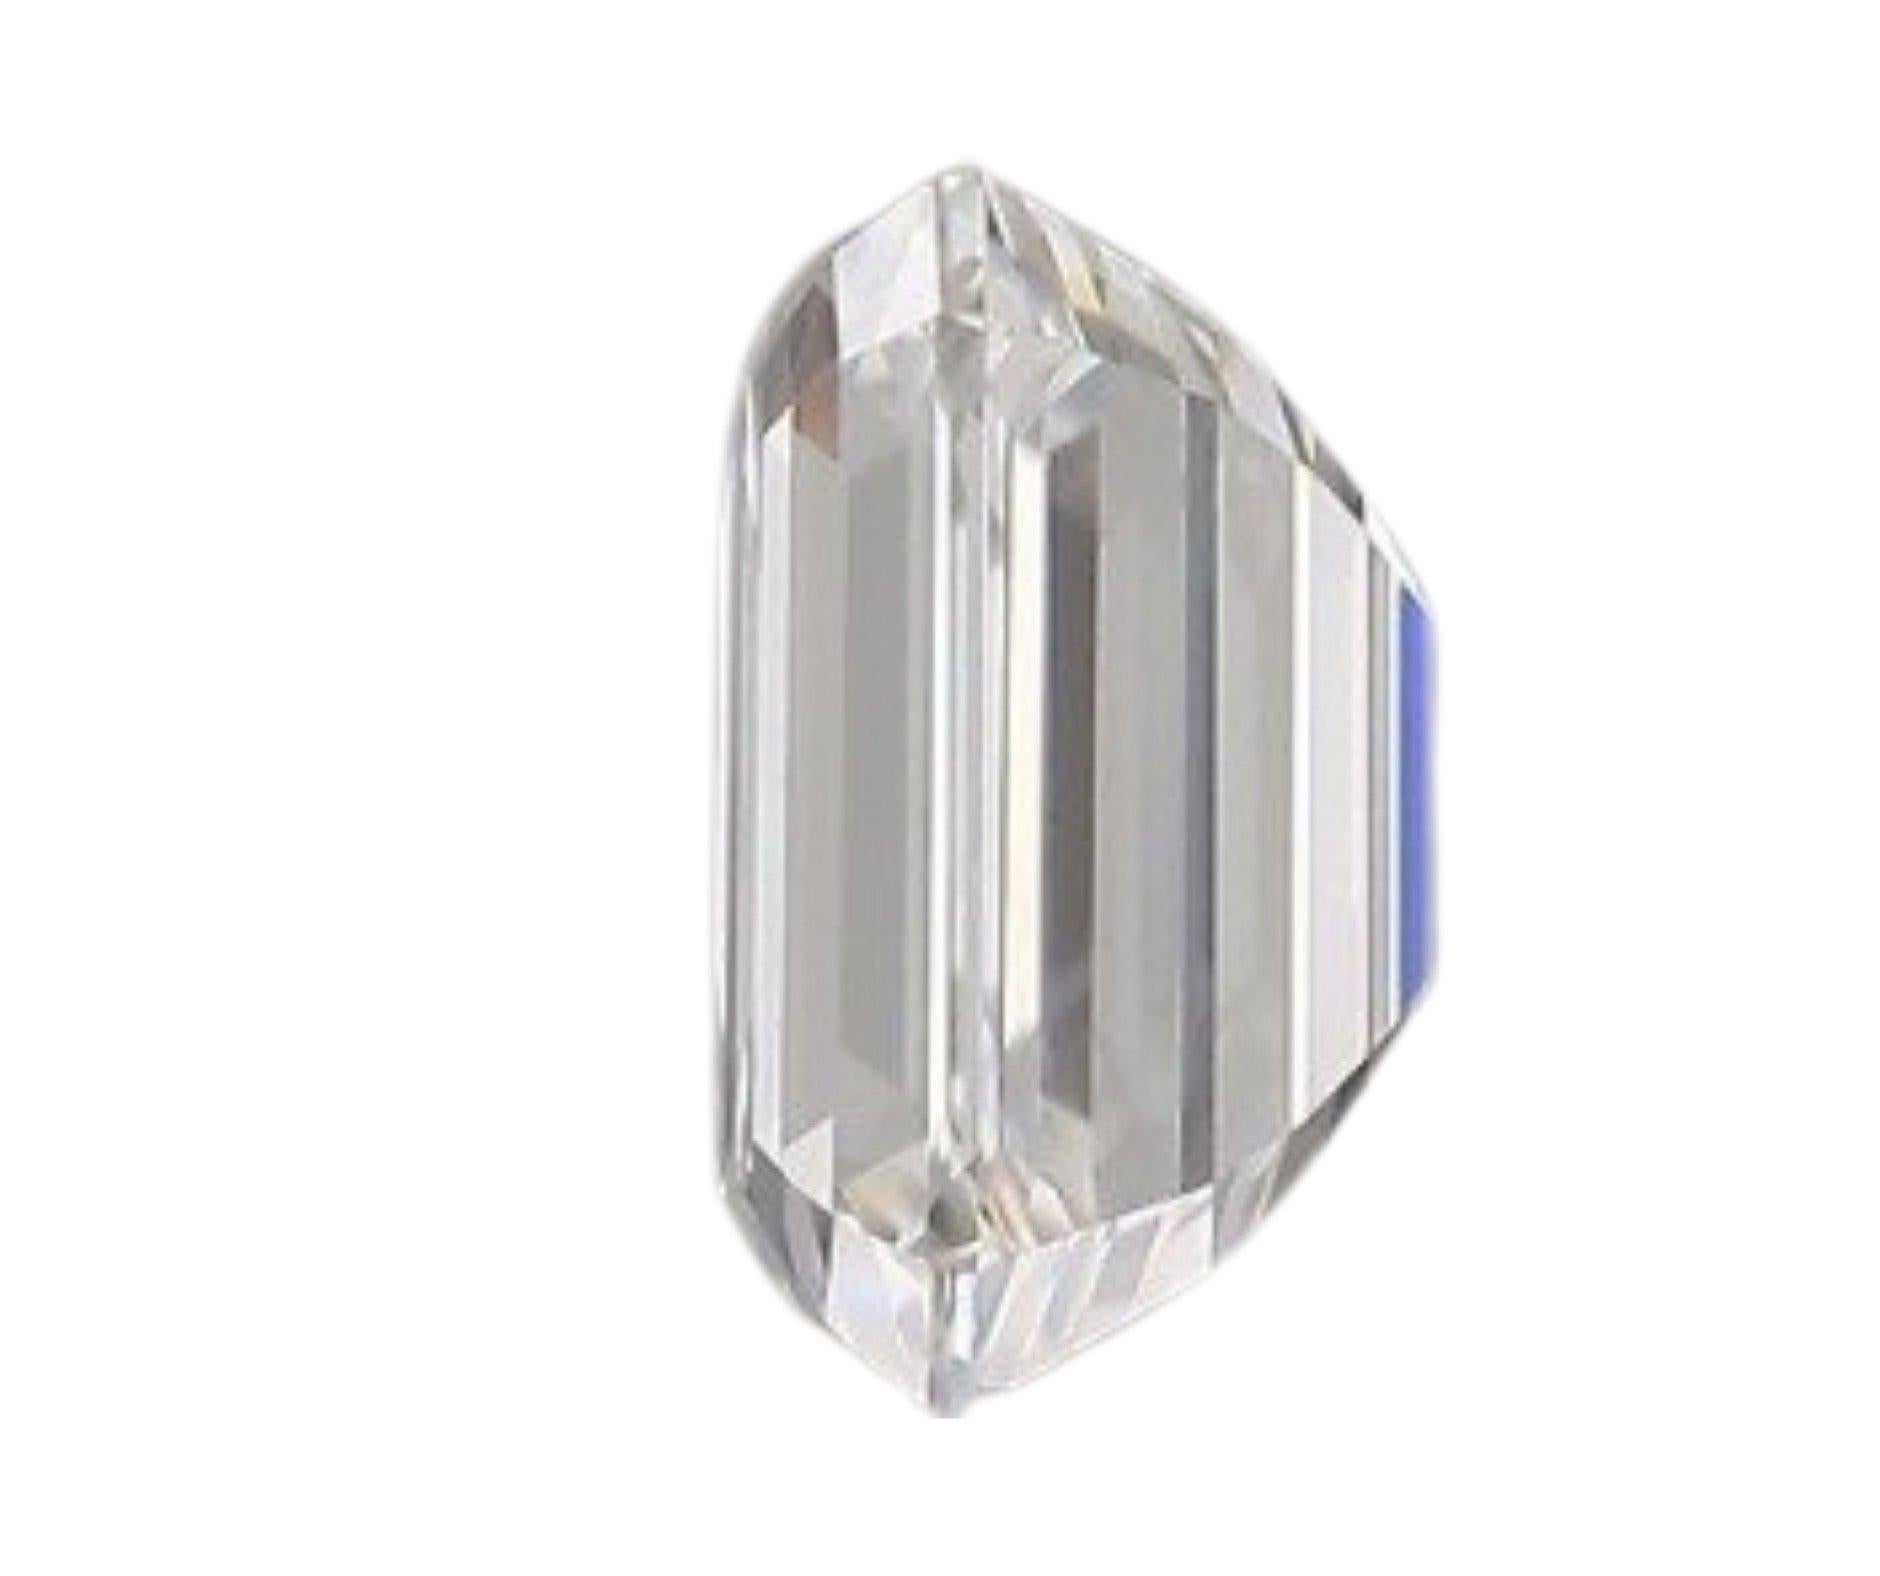 2 Teile, natürliche Diamanten, 0,81 Karat, Smaragd, I, Falls 'Flawless', GIA-Zertifikat (Smaragdschliff) im Angebot